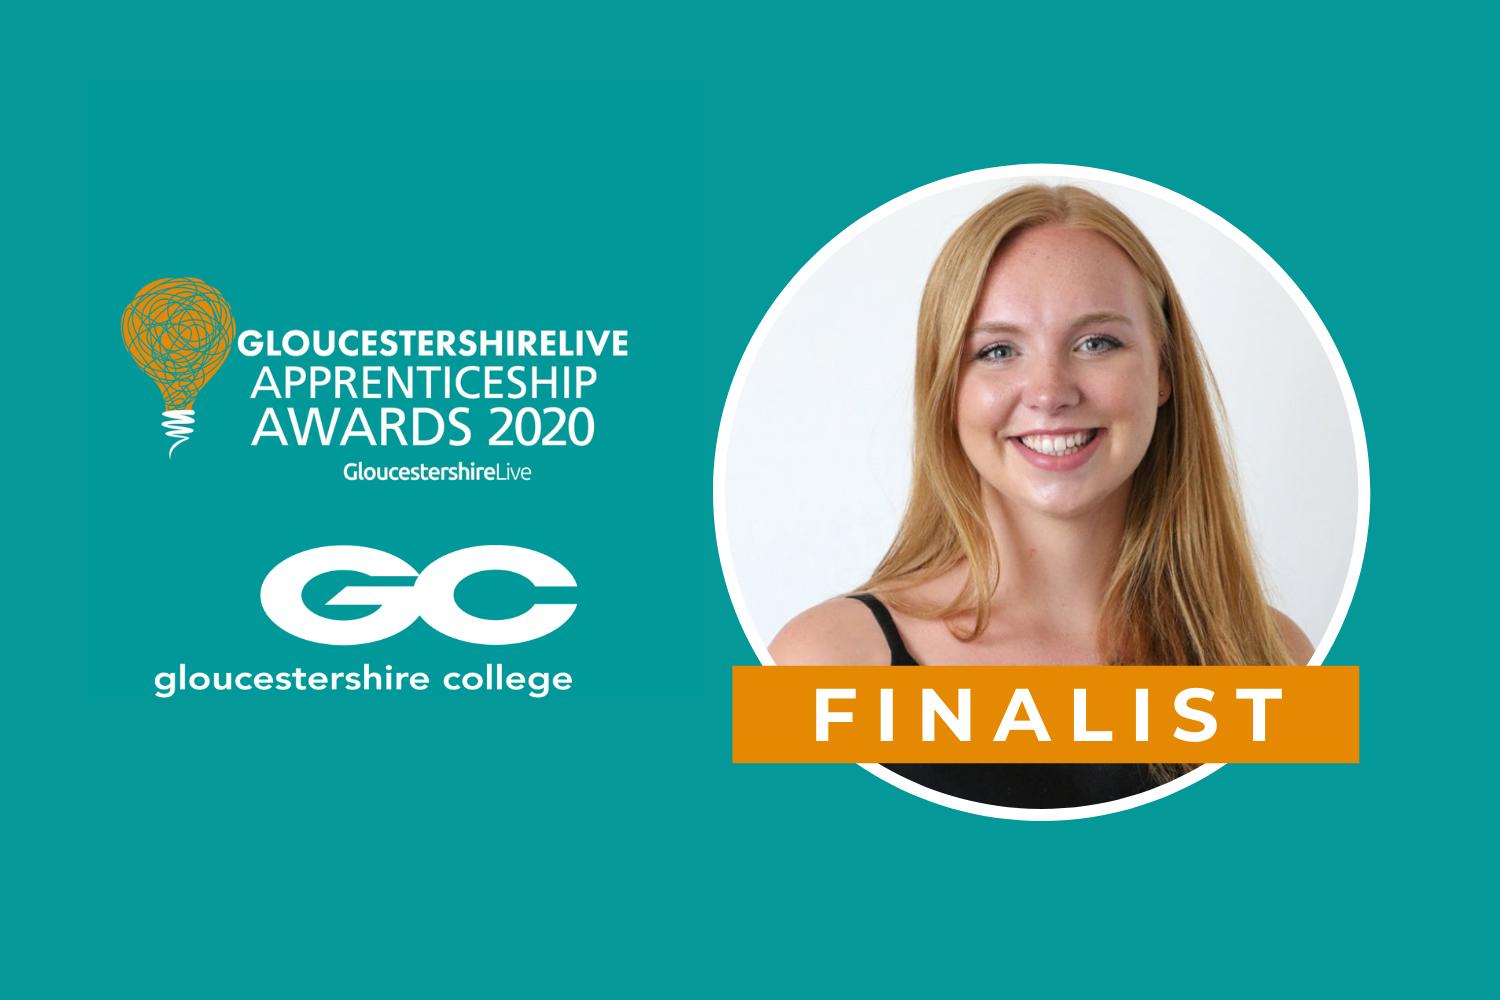 Apprentice Spotlight: Shannon Phillips, GloucestershireLive Apprenticeship Awards 2020 Finalist